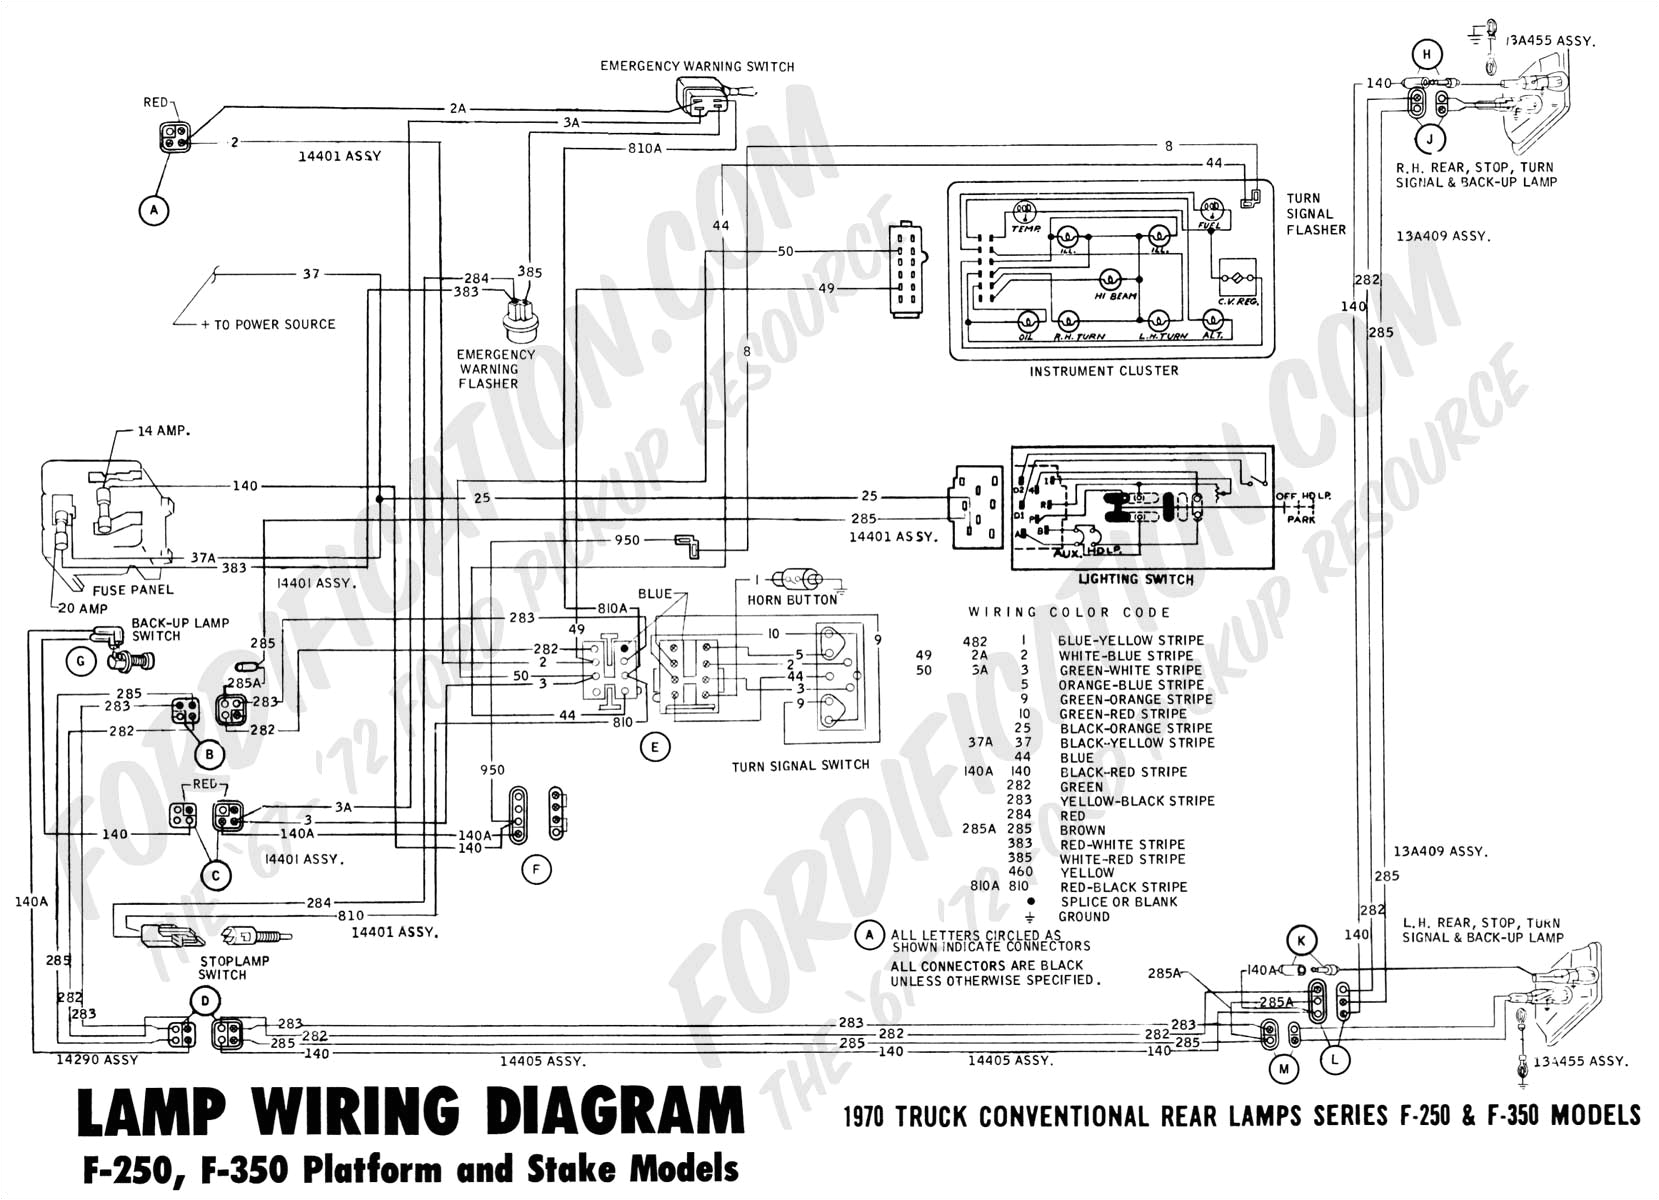 02 f150 wiring diagram manual e book 2002 f150 wiring diagram horn 02 f150 wiring diagram